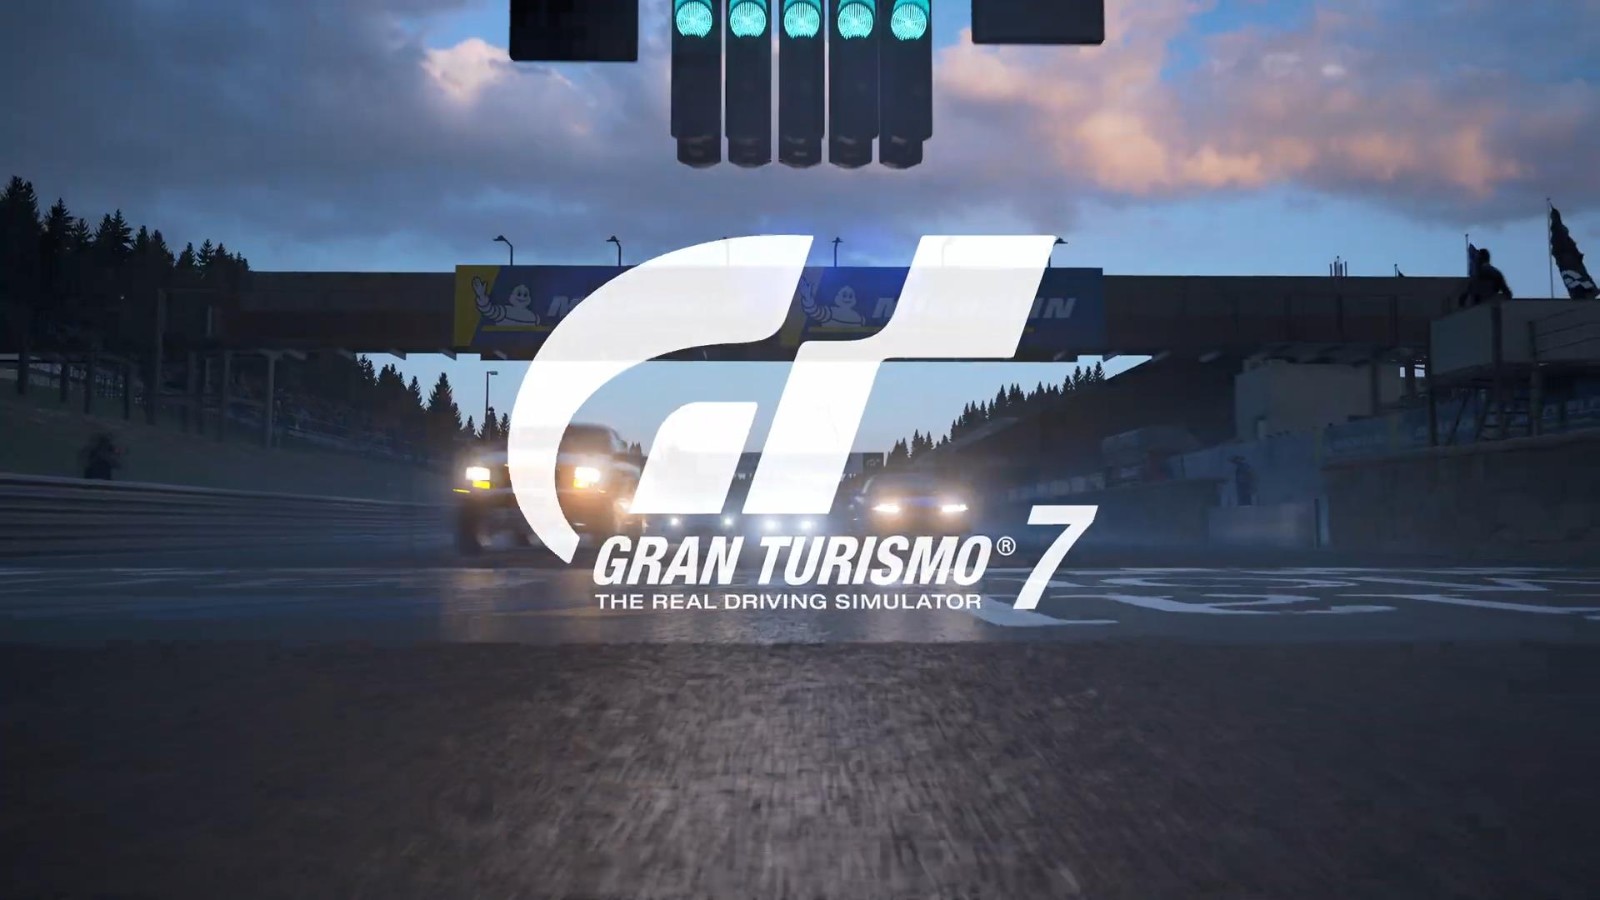 《GT赛车7》新TV广告宣传片 3月4日正式发售